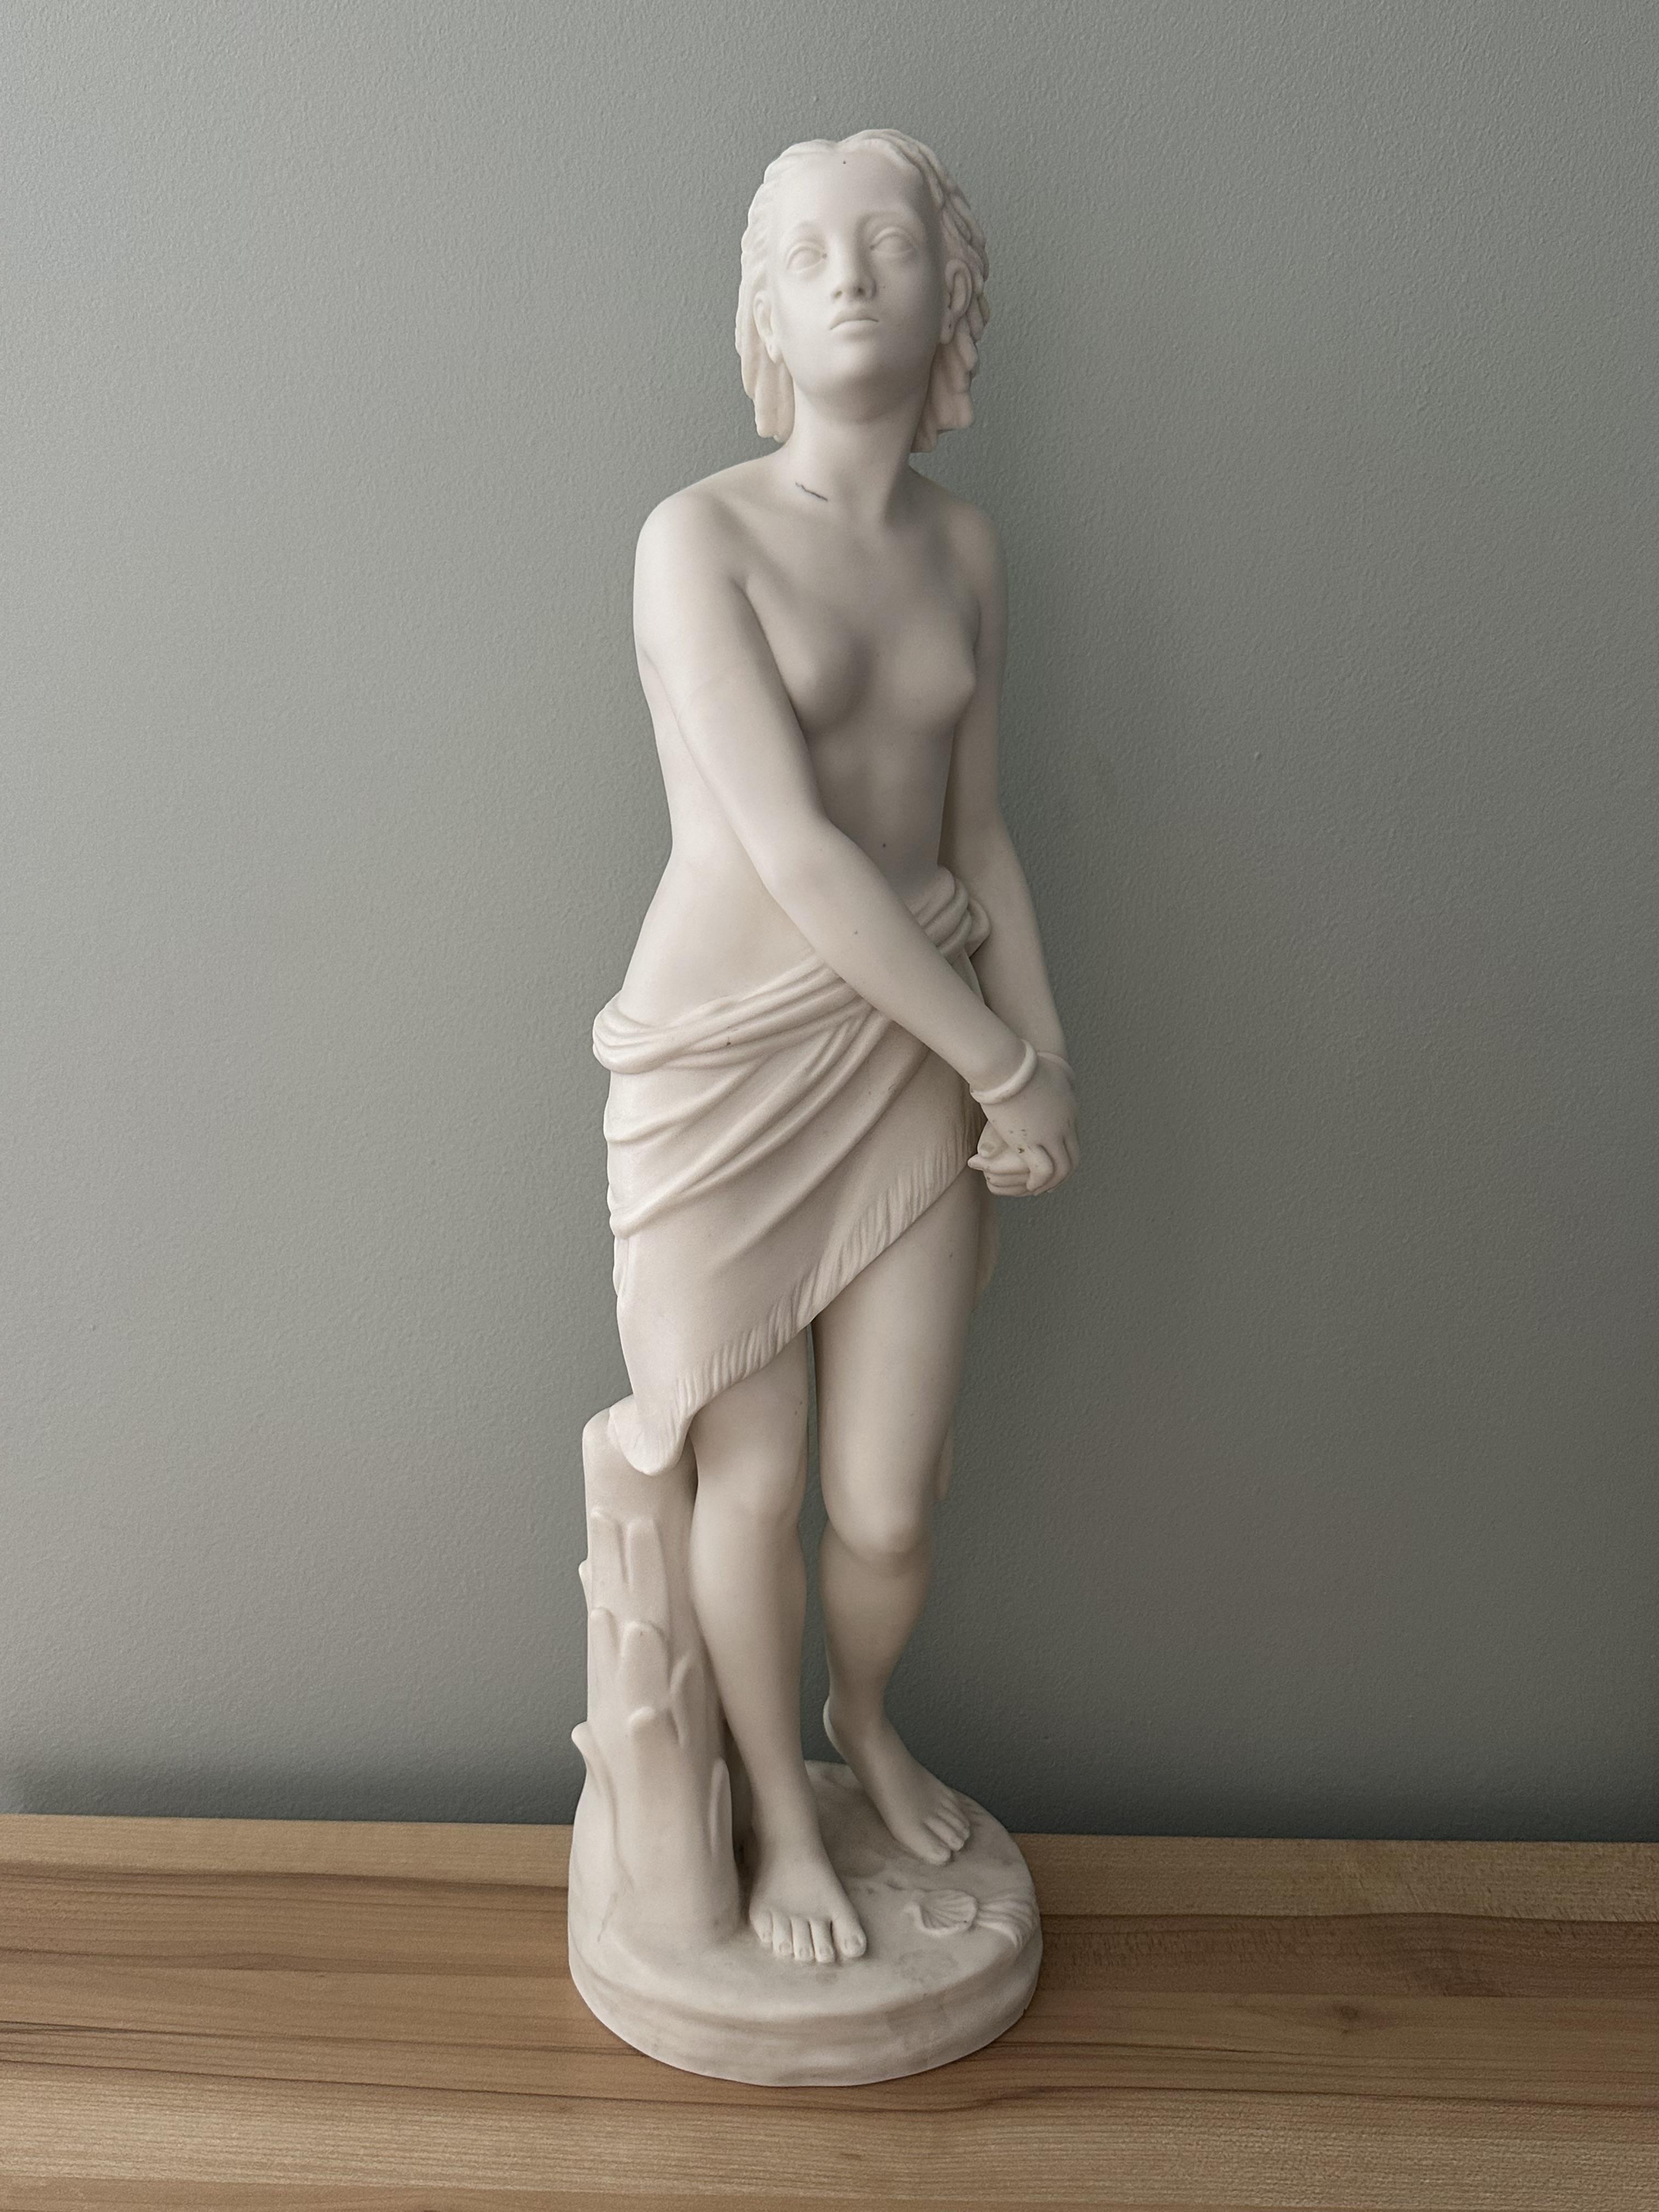 Parian Ware Minton Sculpture by John Bell. One ha